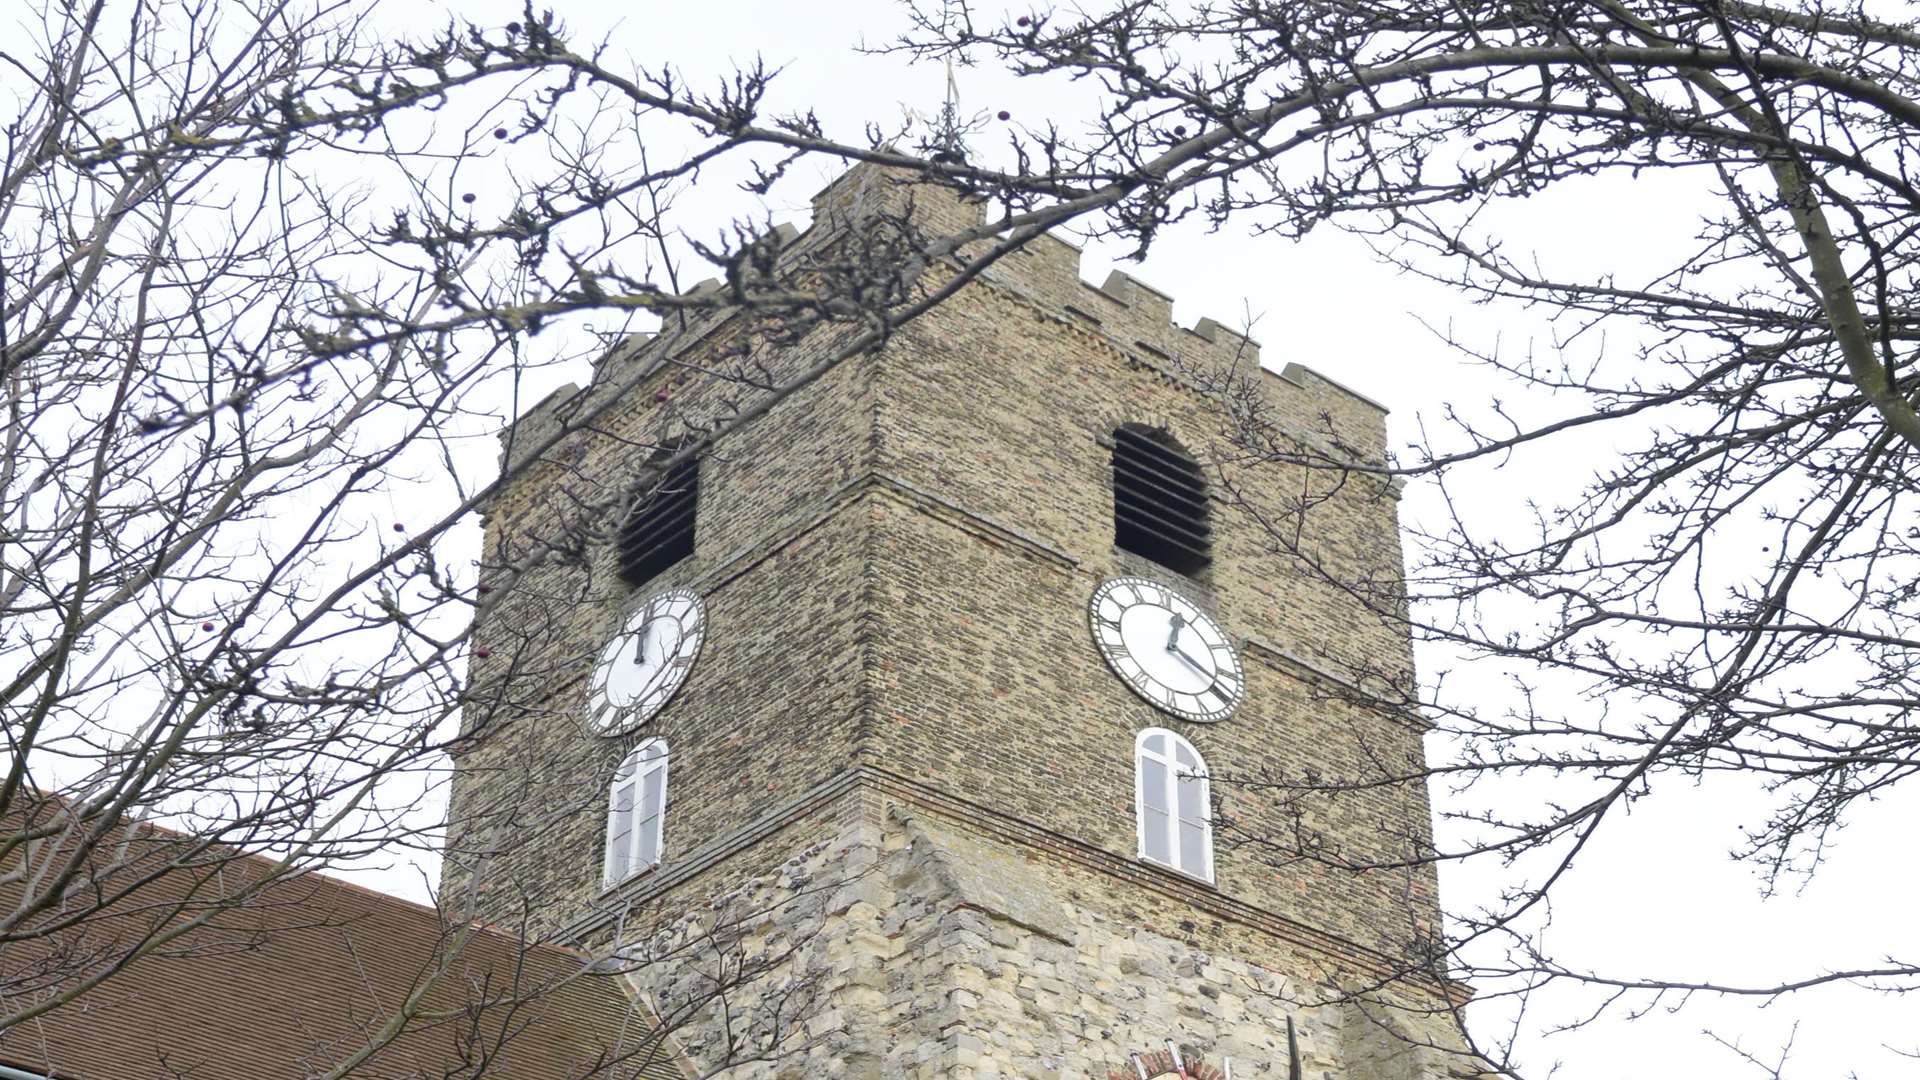 St Peter's Church clock chimes quarterly